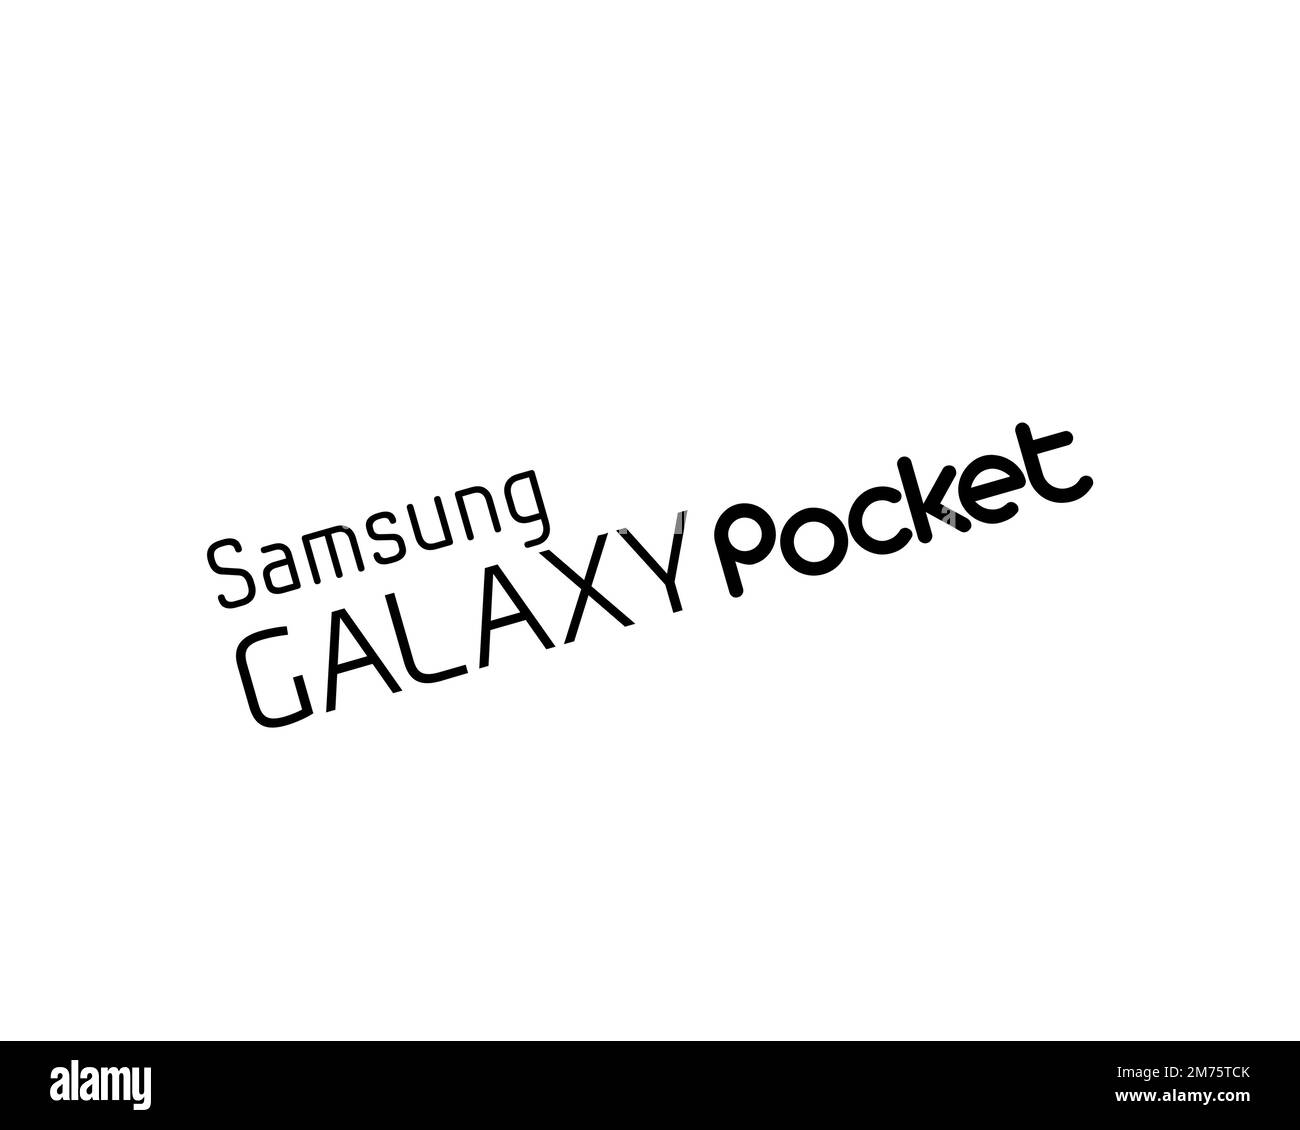 Samsung Galaxy Pocket, Rotated Logo, White Background Stock Photo